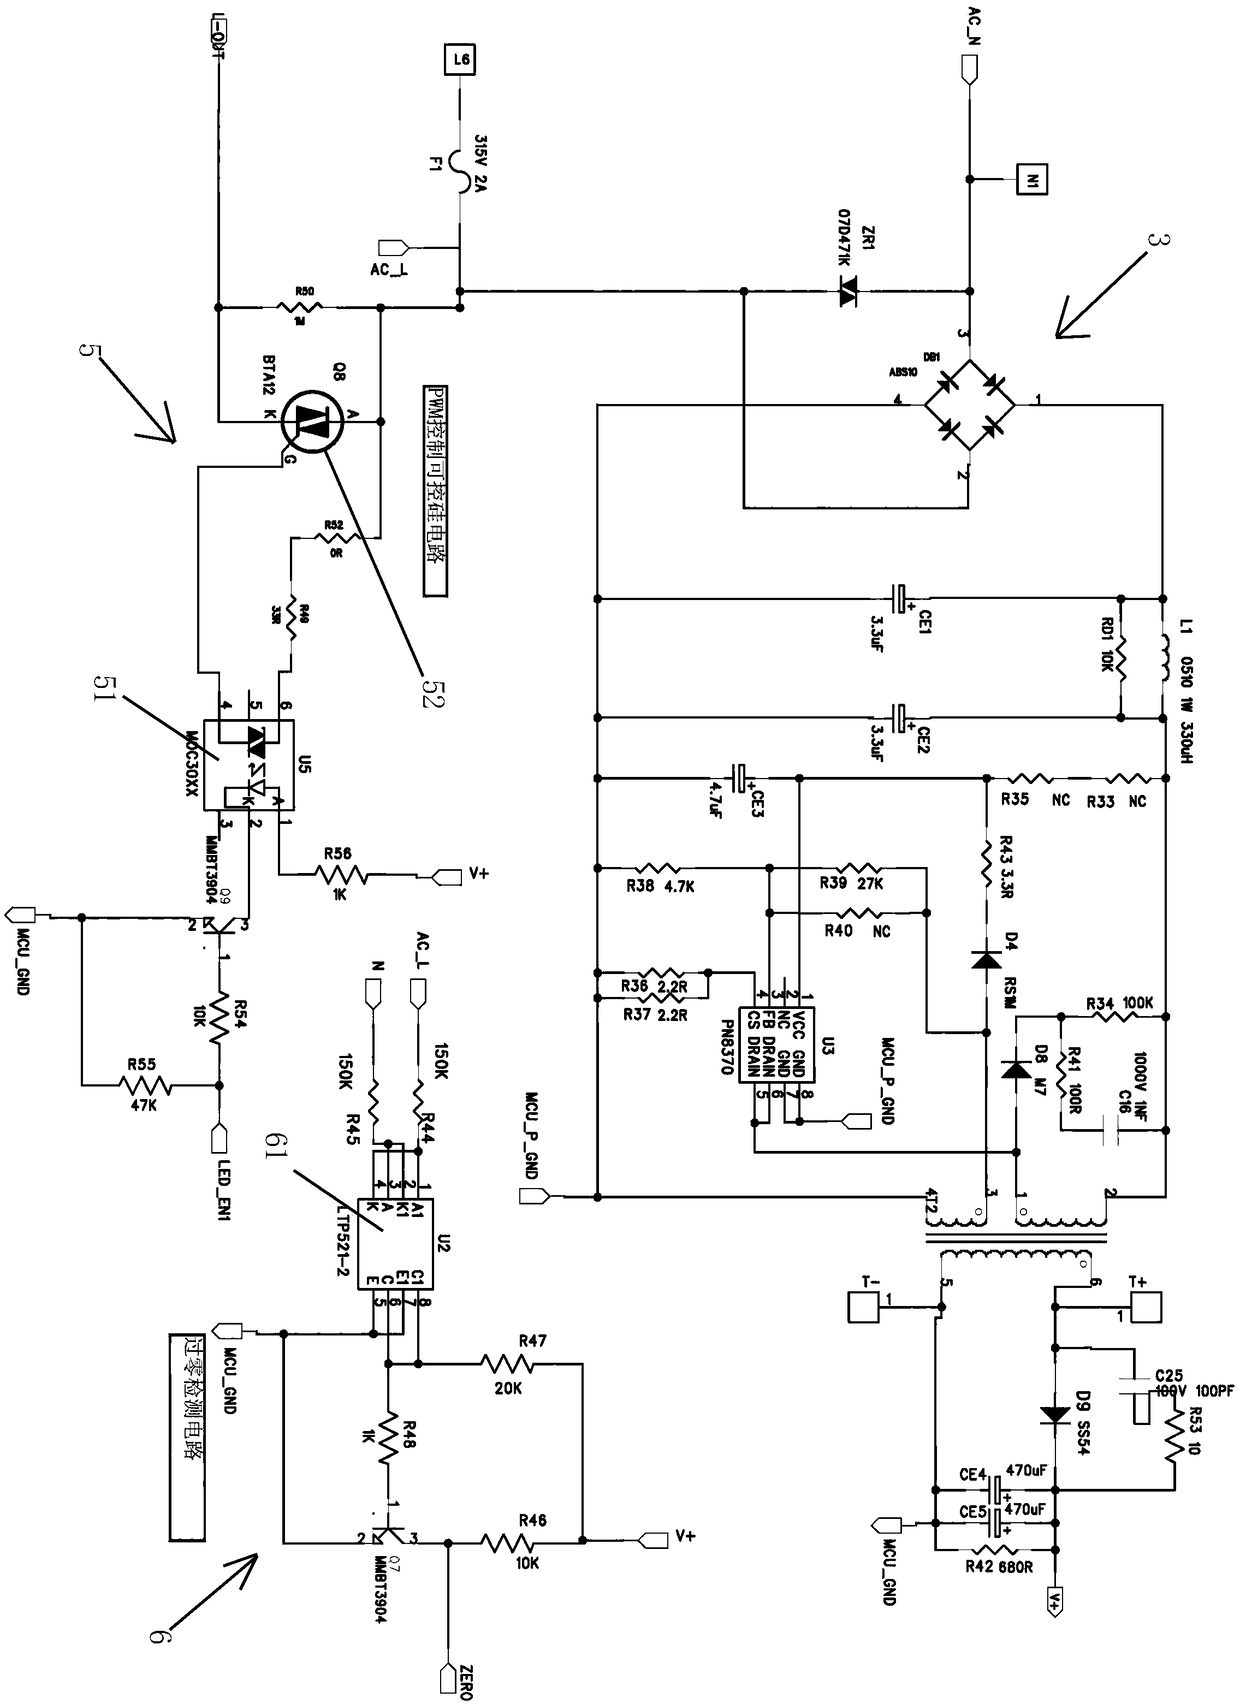 Control circuit compatible with 0-10V light modulator and TRAIC light modulator